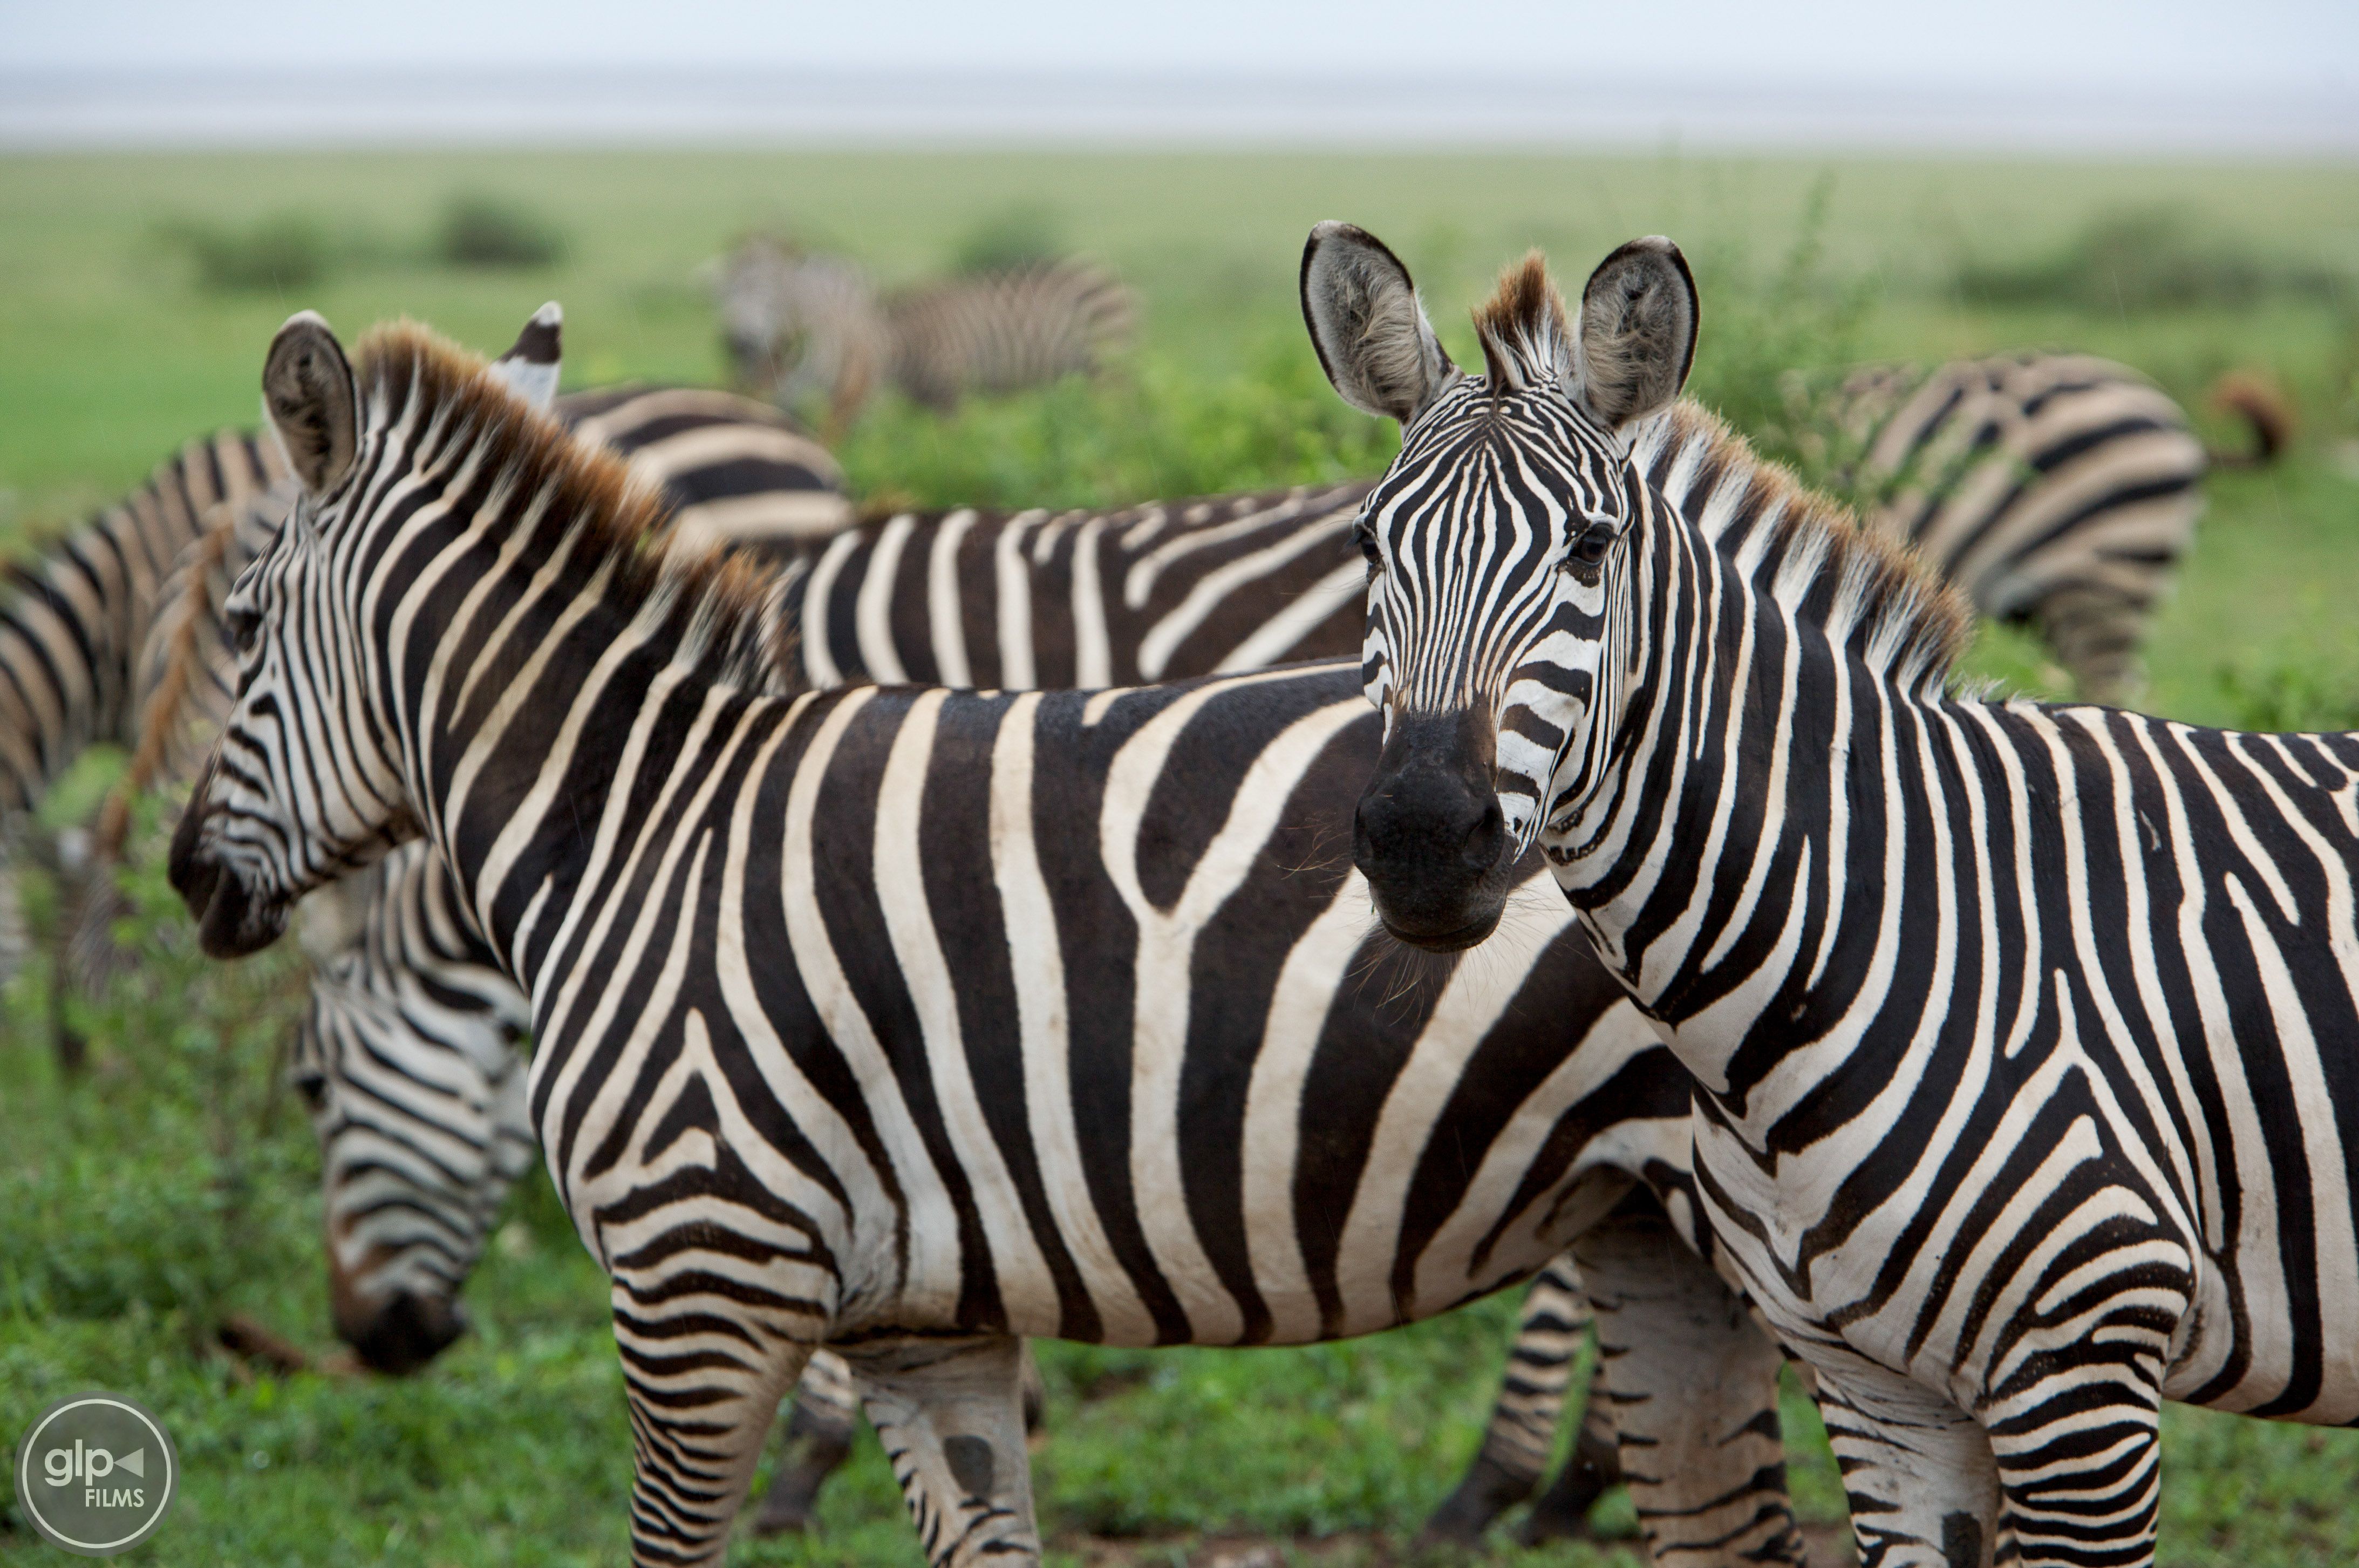 Zebras in Africa at the Manyara Ranch. | Africa | Pinterest | Ranch ...